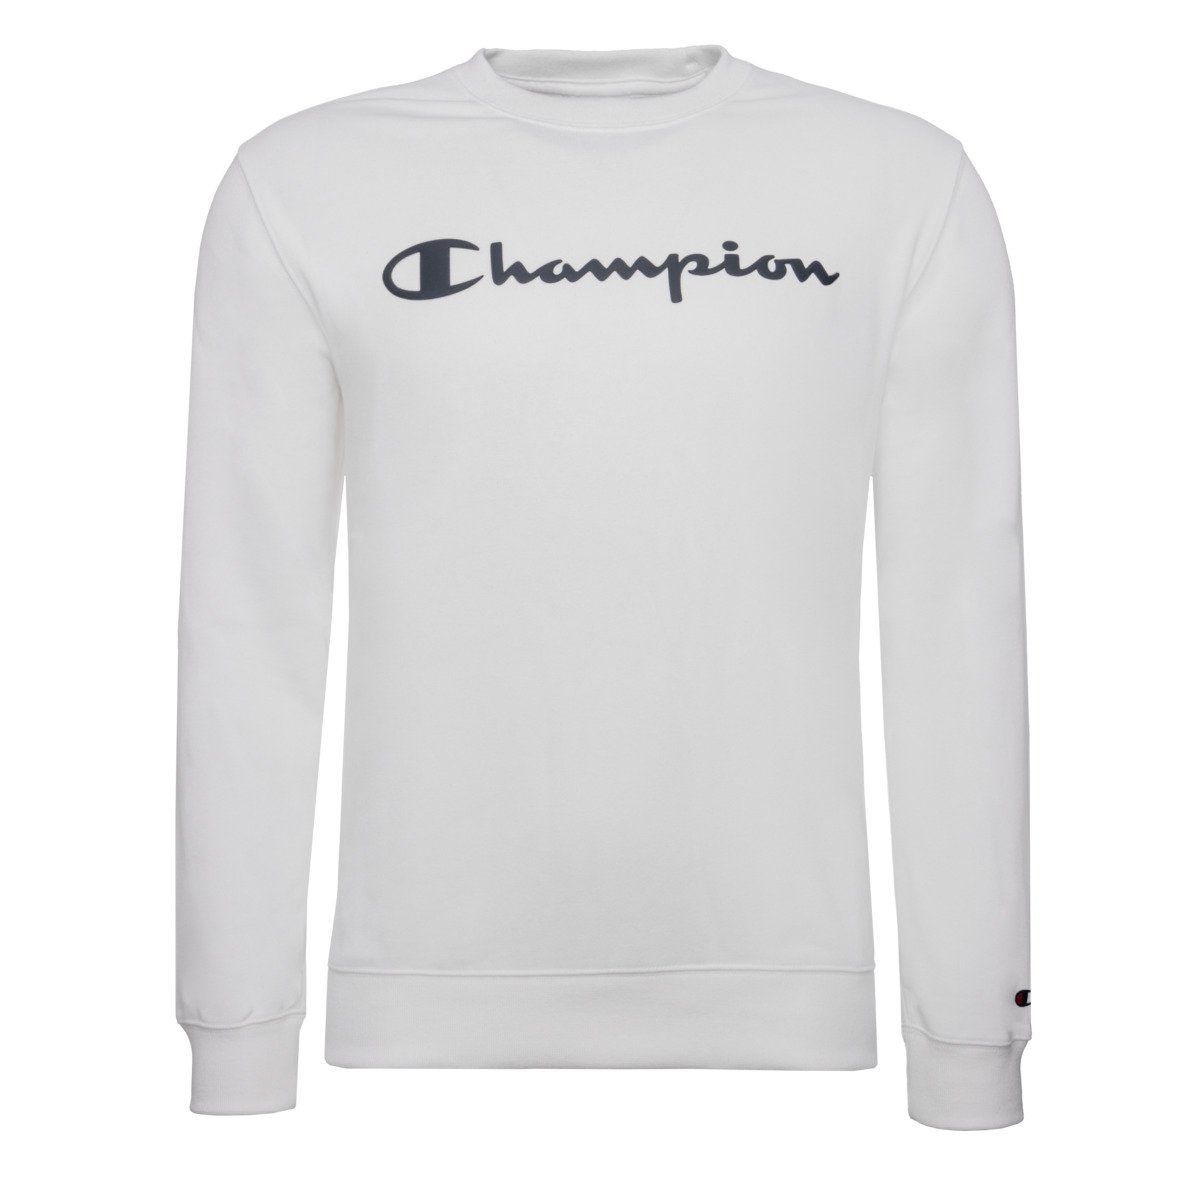 Champion Sweatshirt Crewneck Herren weiss